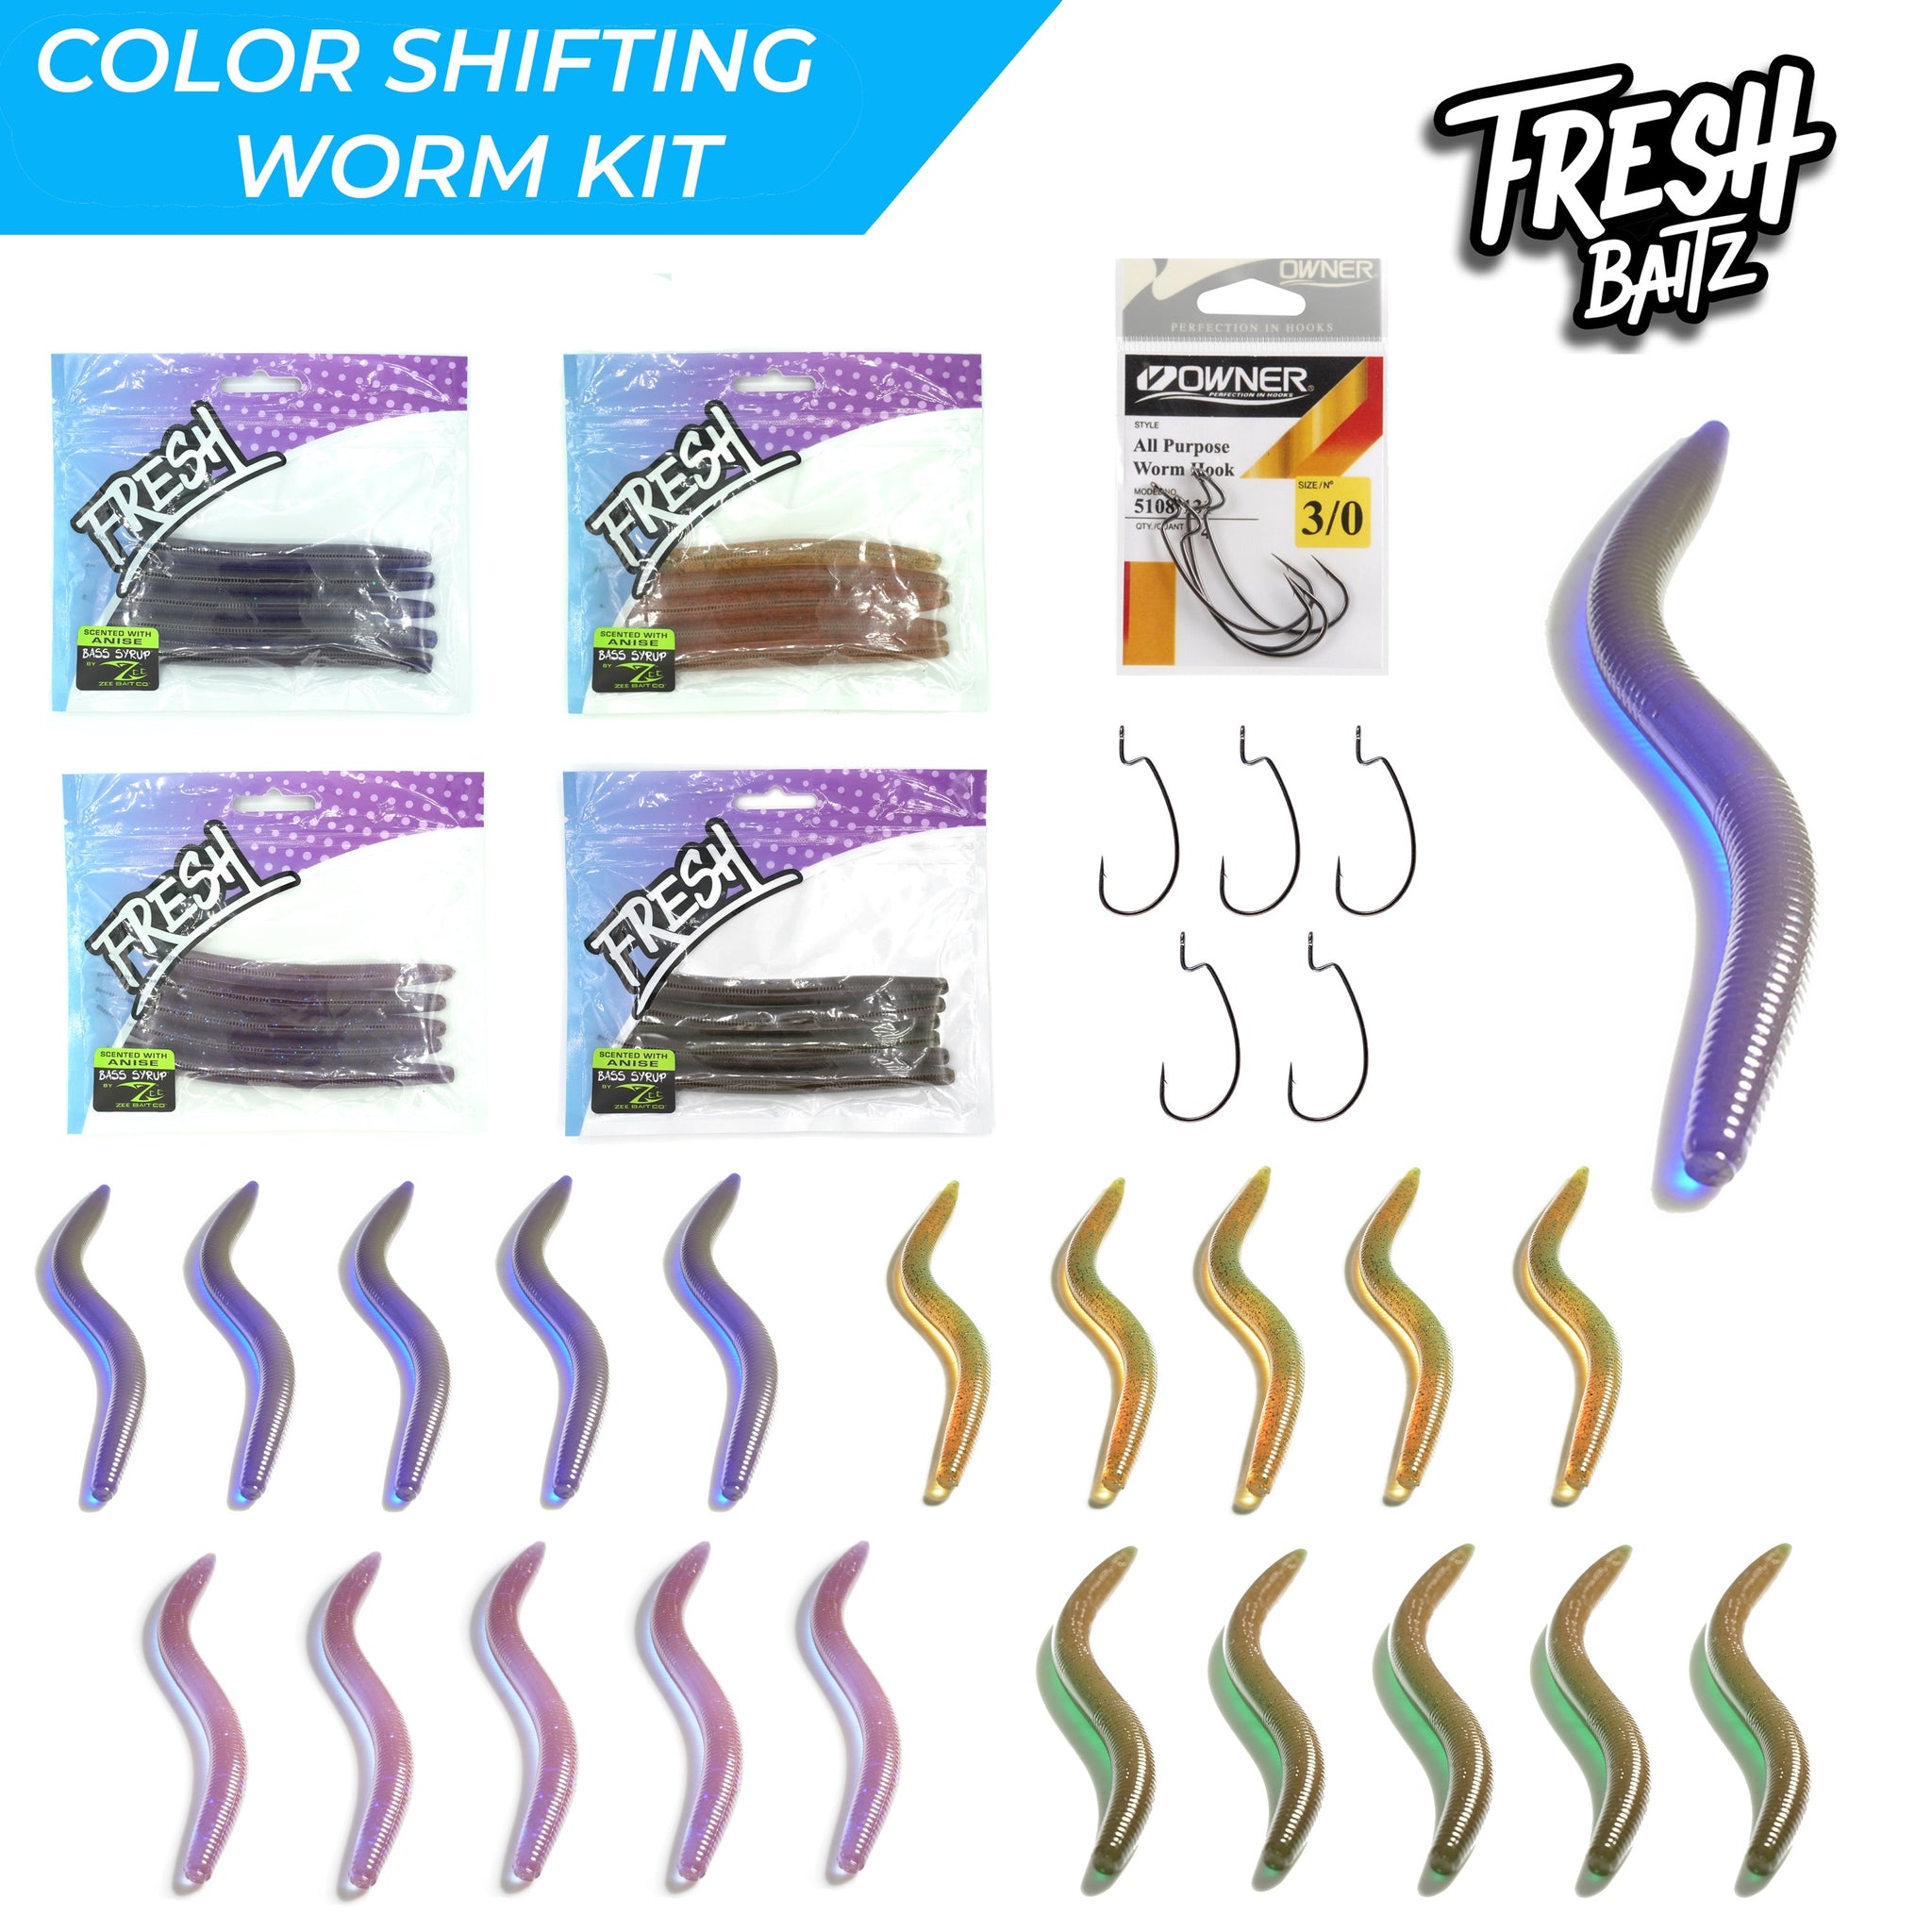 Color Shifting Fun Pack - Freshbaitz